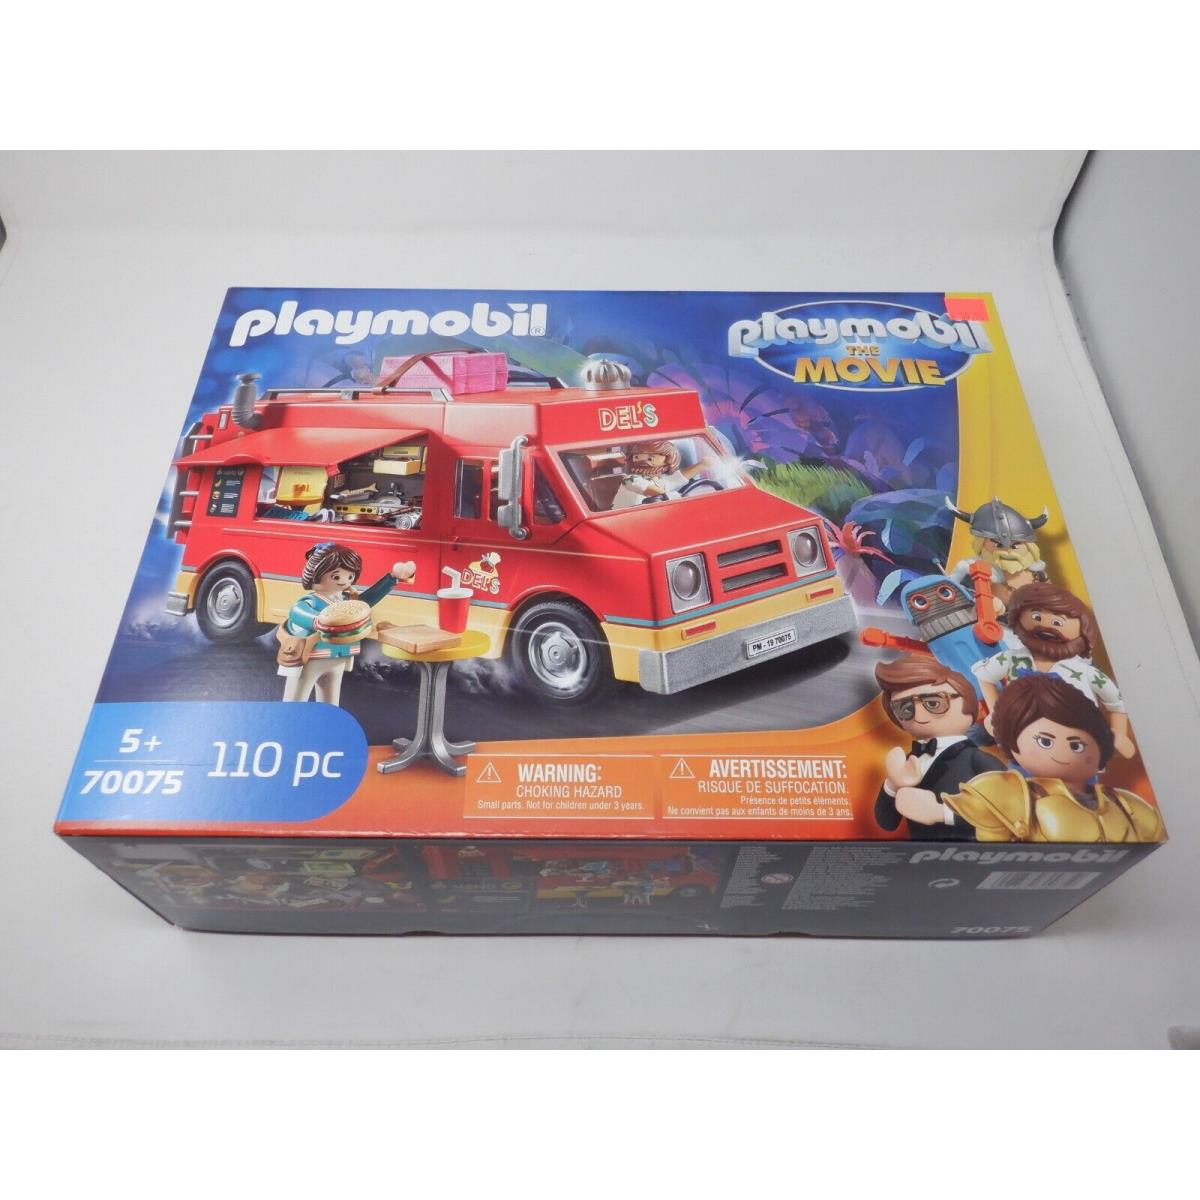 Playmobil The Movie Del`s Food Truck 70075 EZ1050